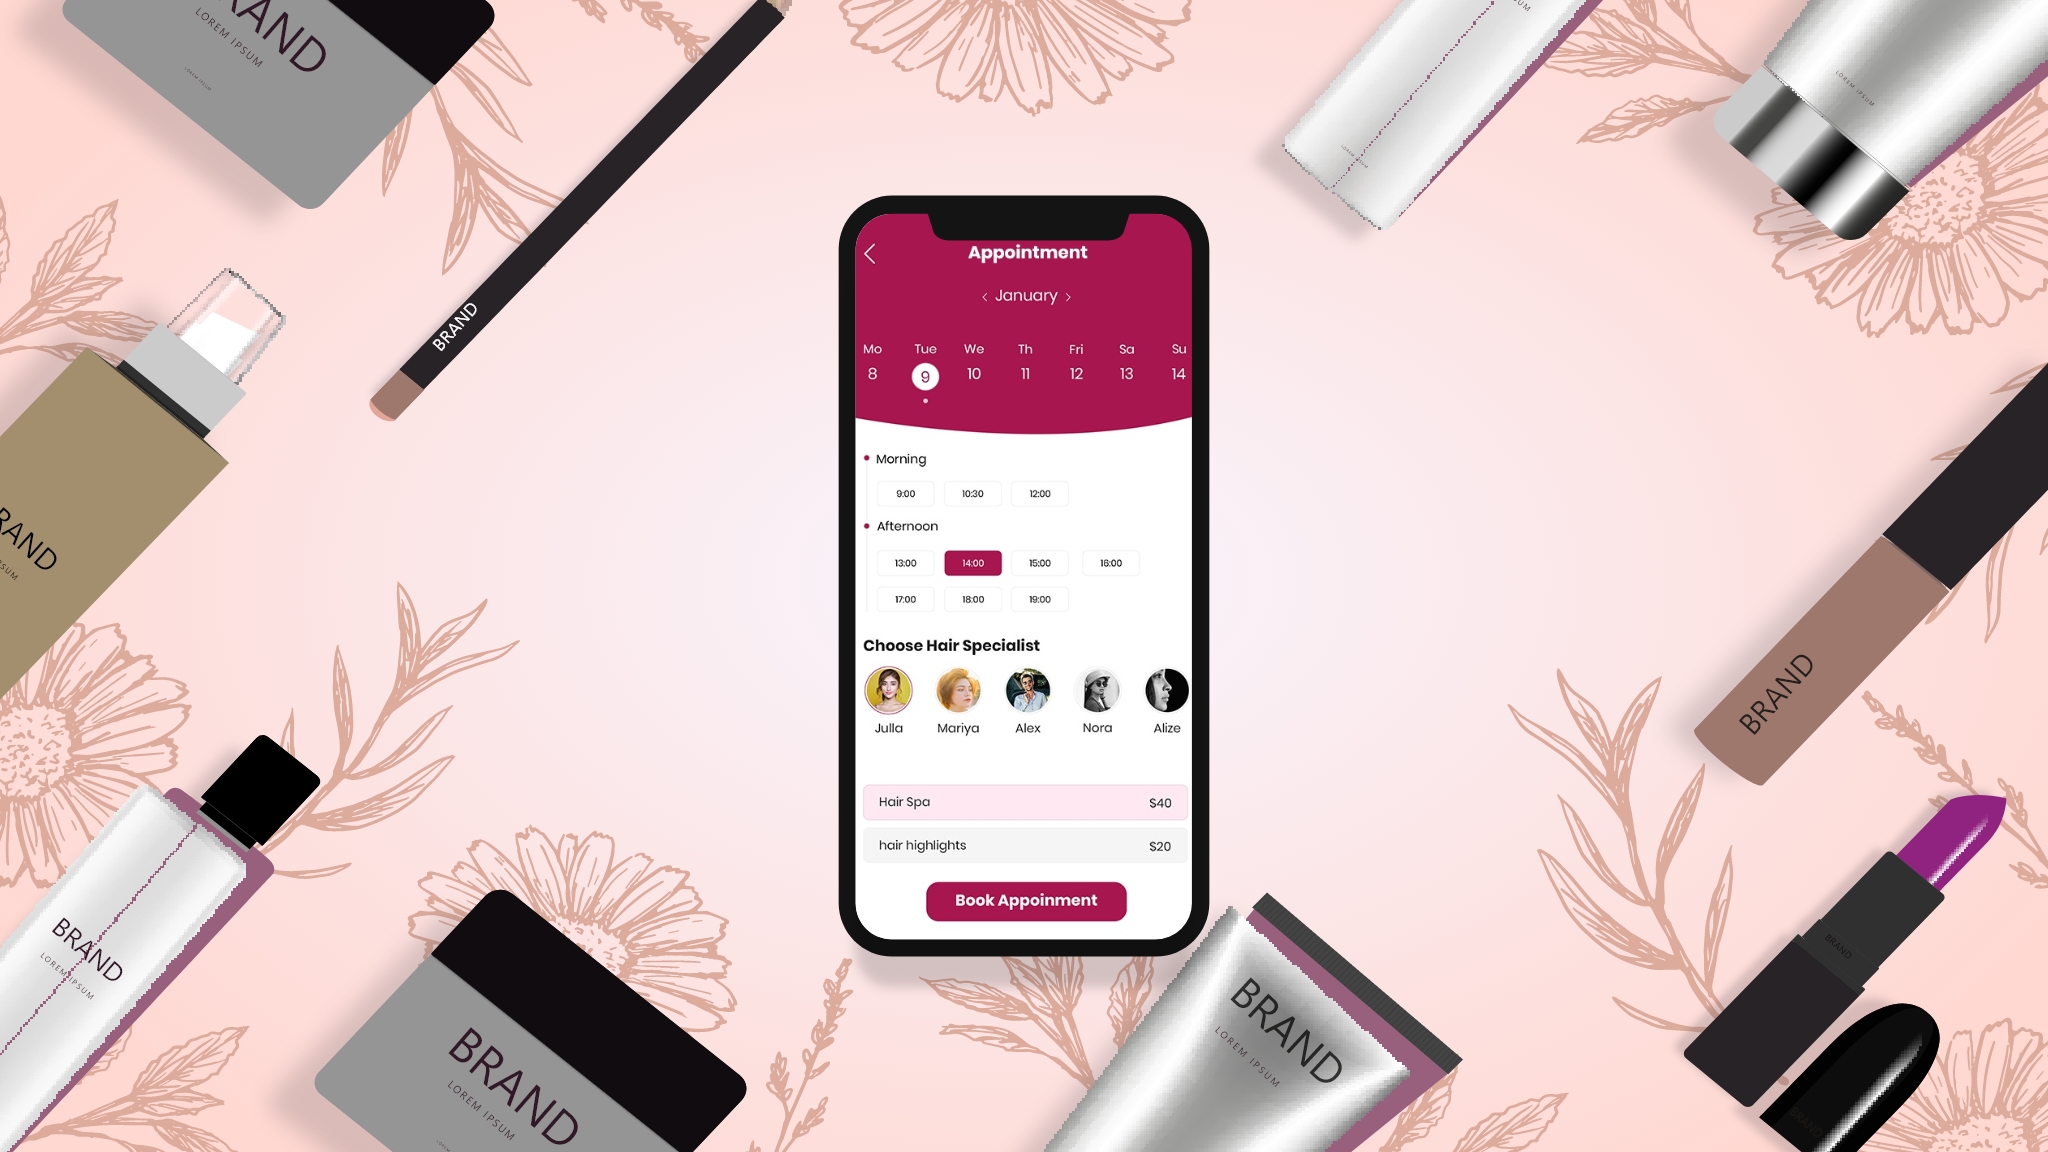 on demand beauty service app